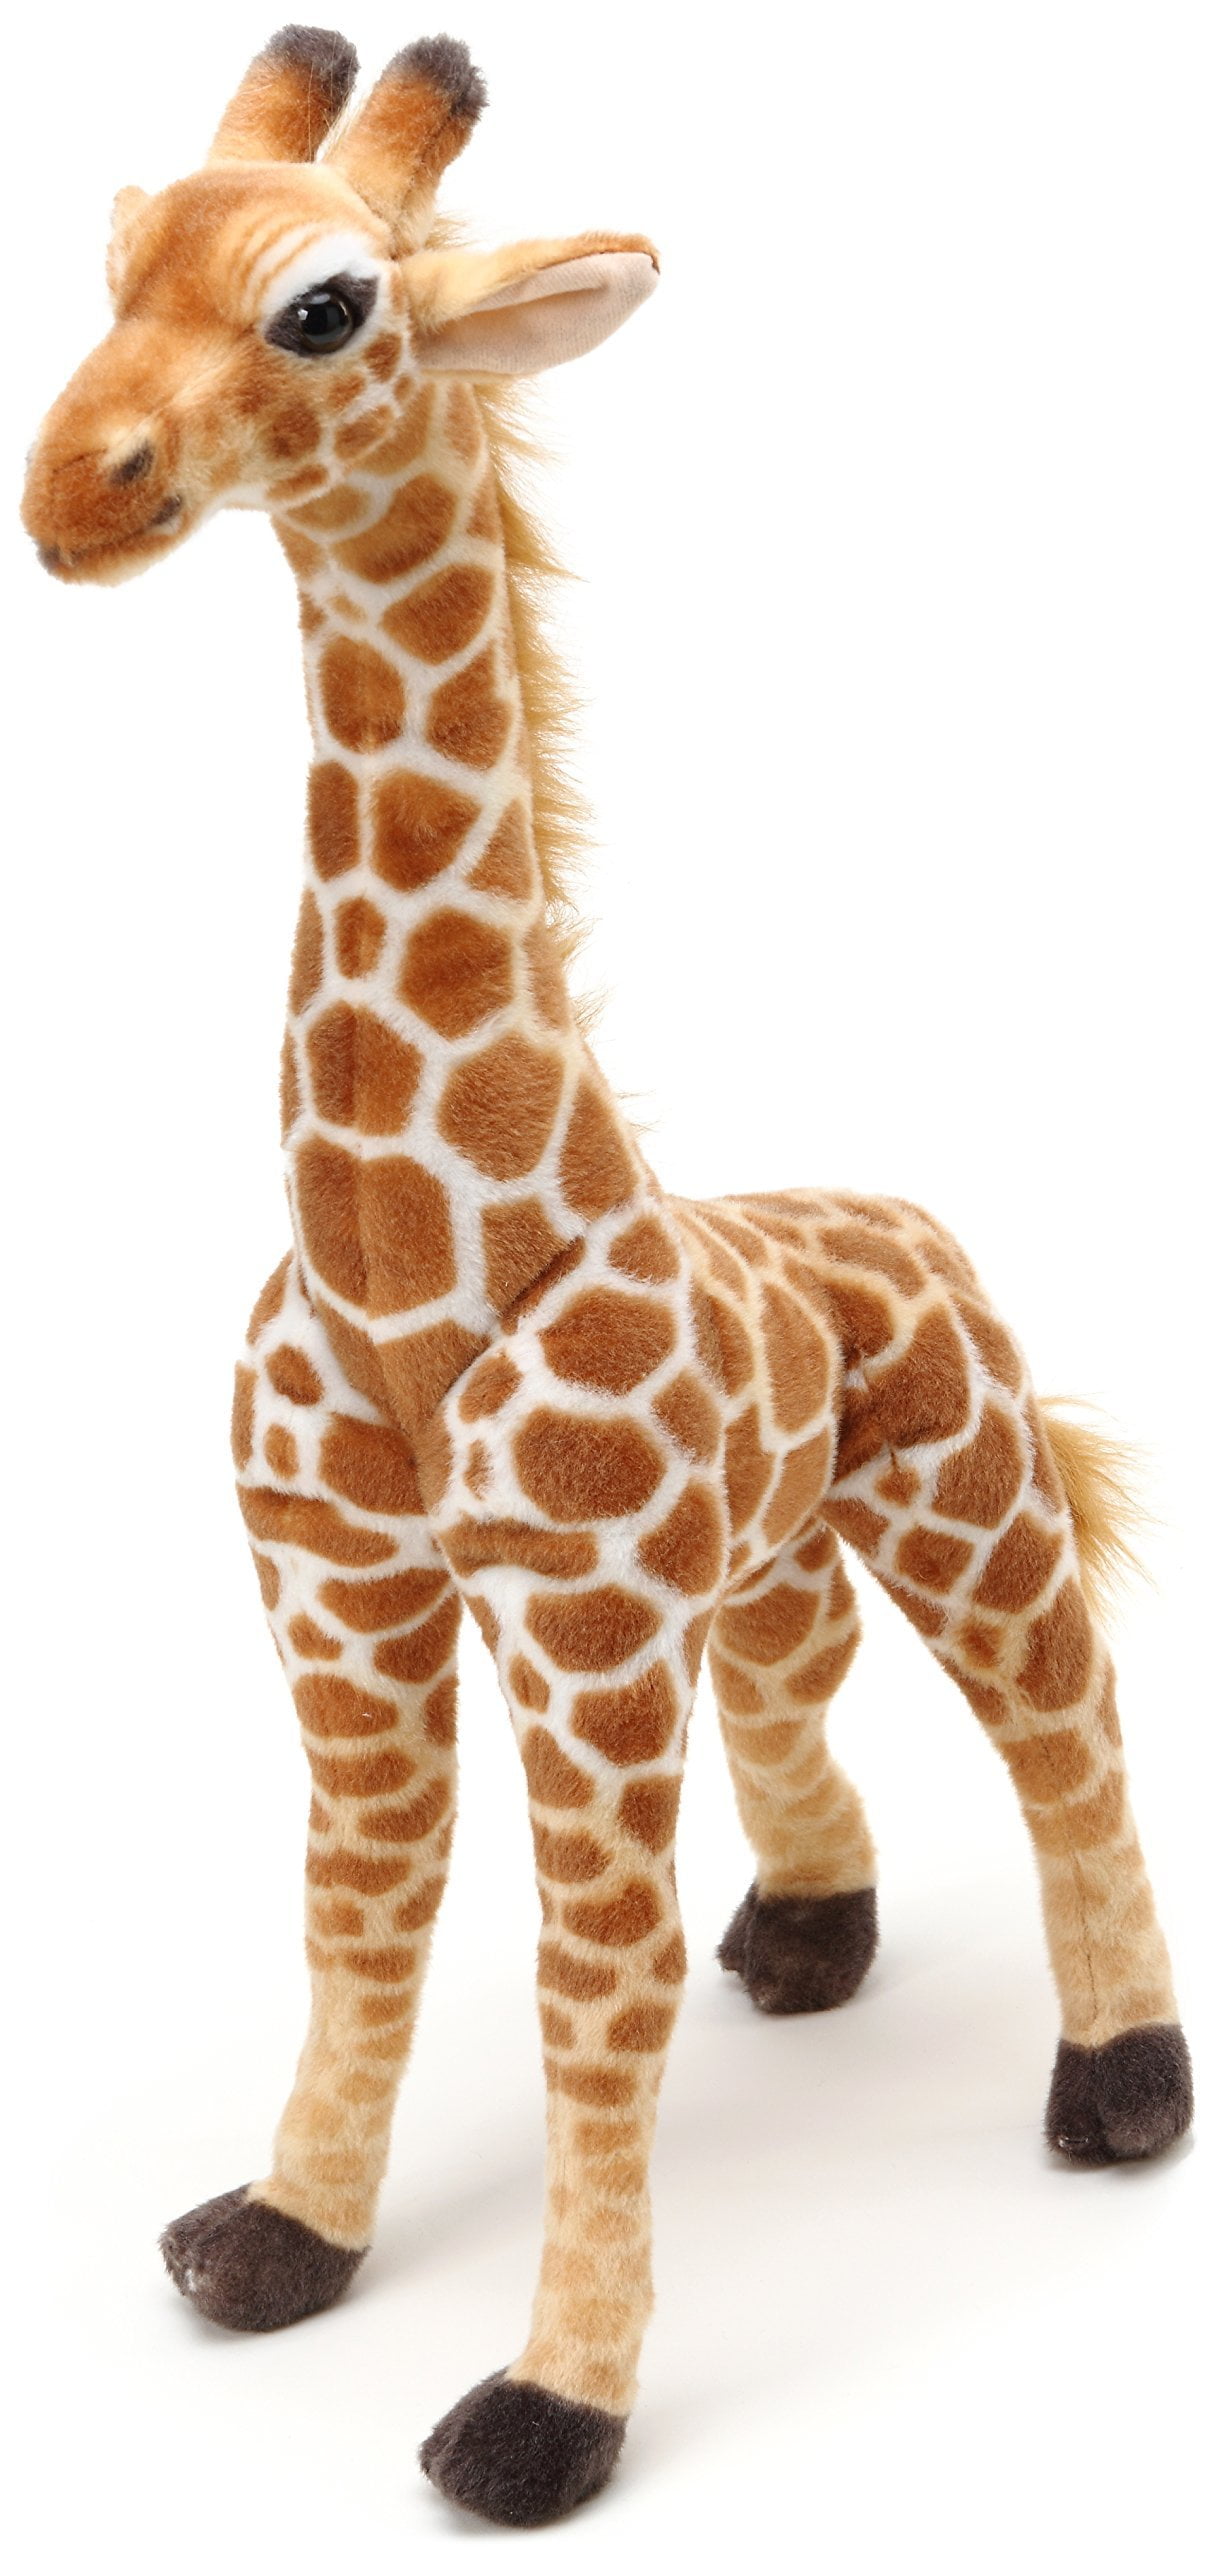 Stuffed Plush Giraffe Collectible by Precious Moments 